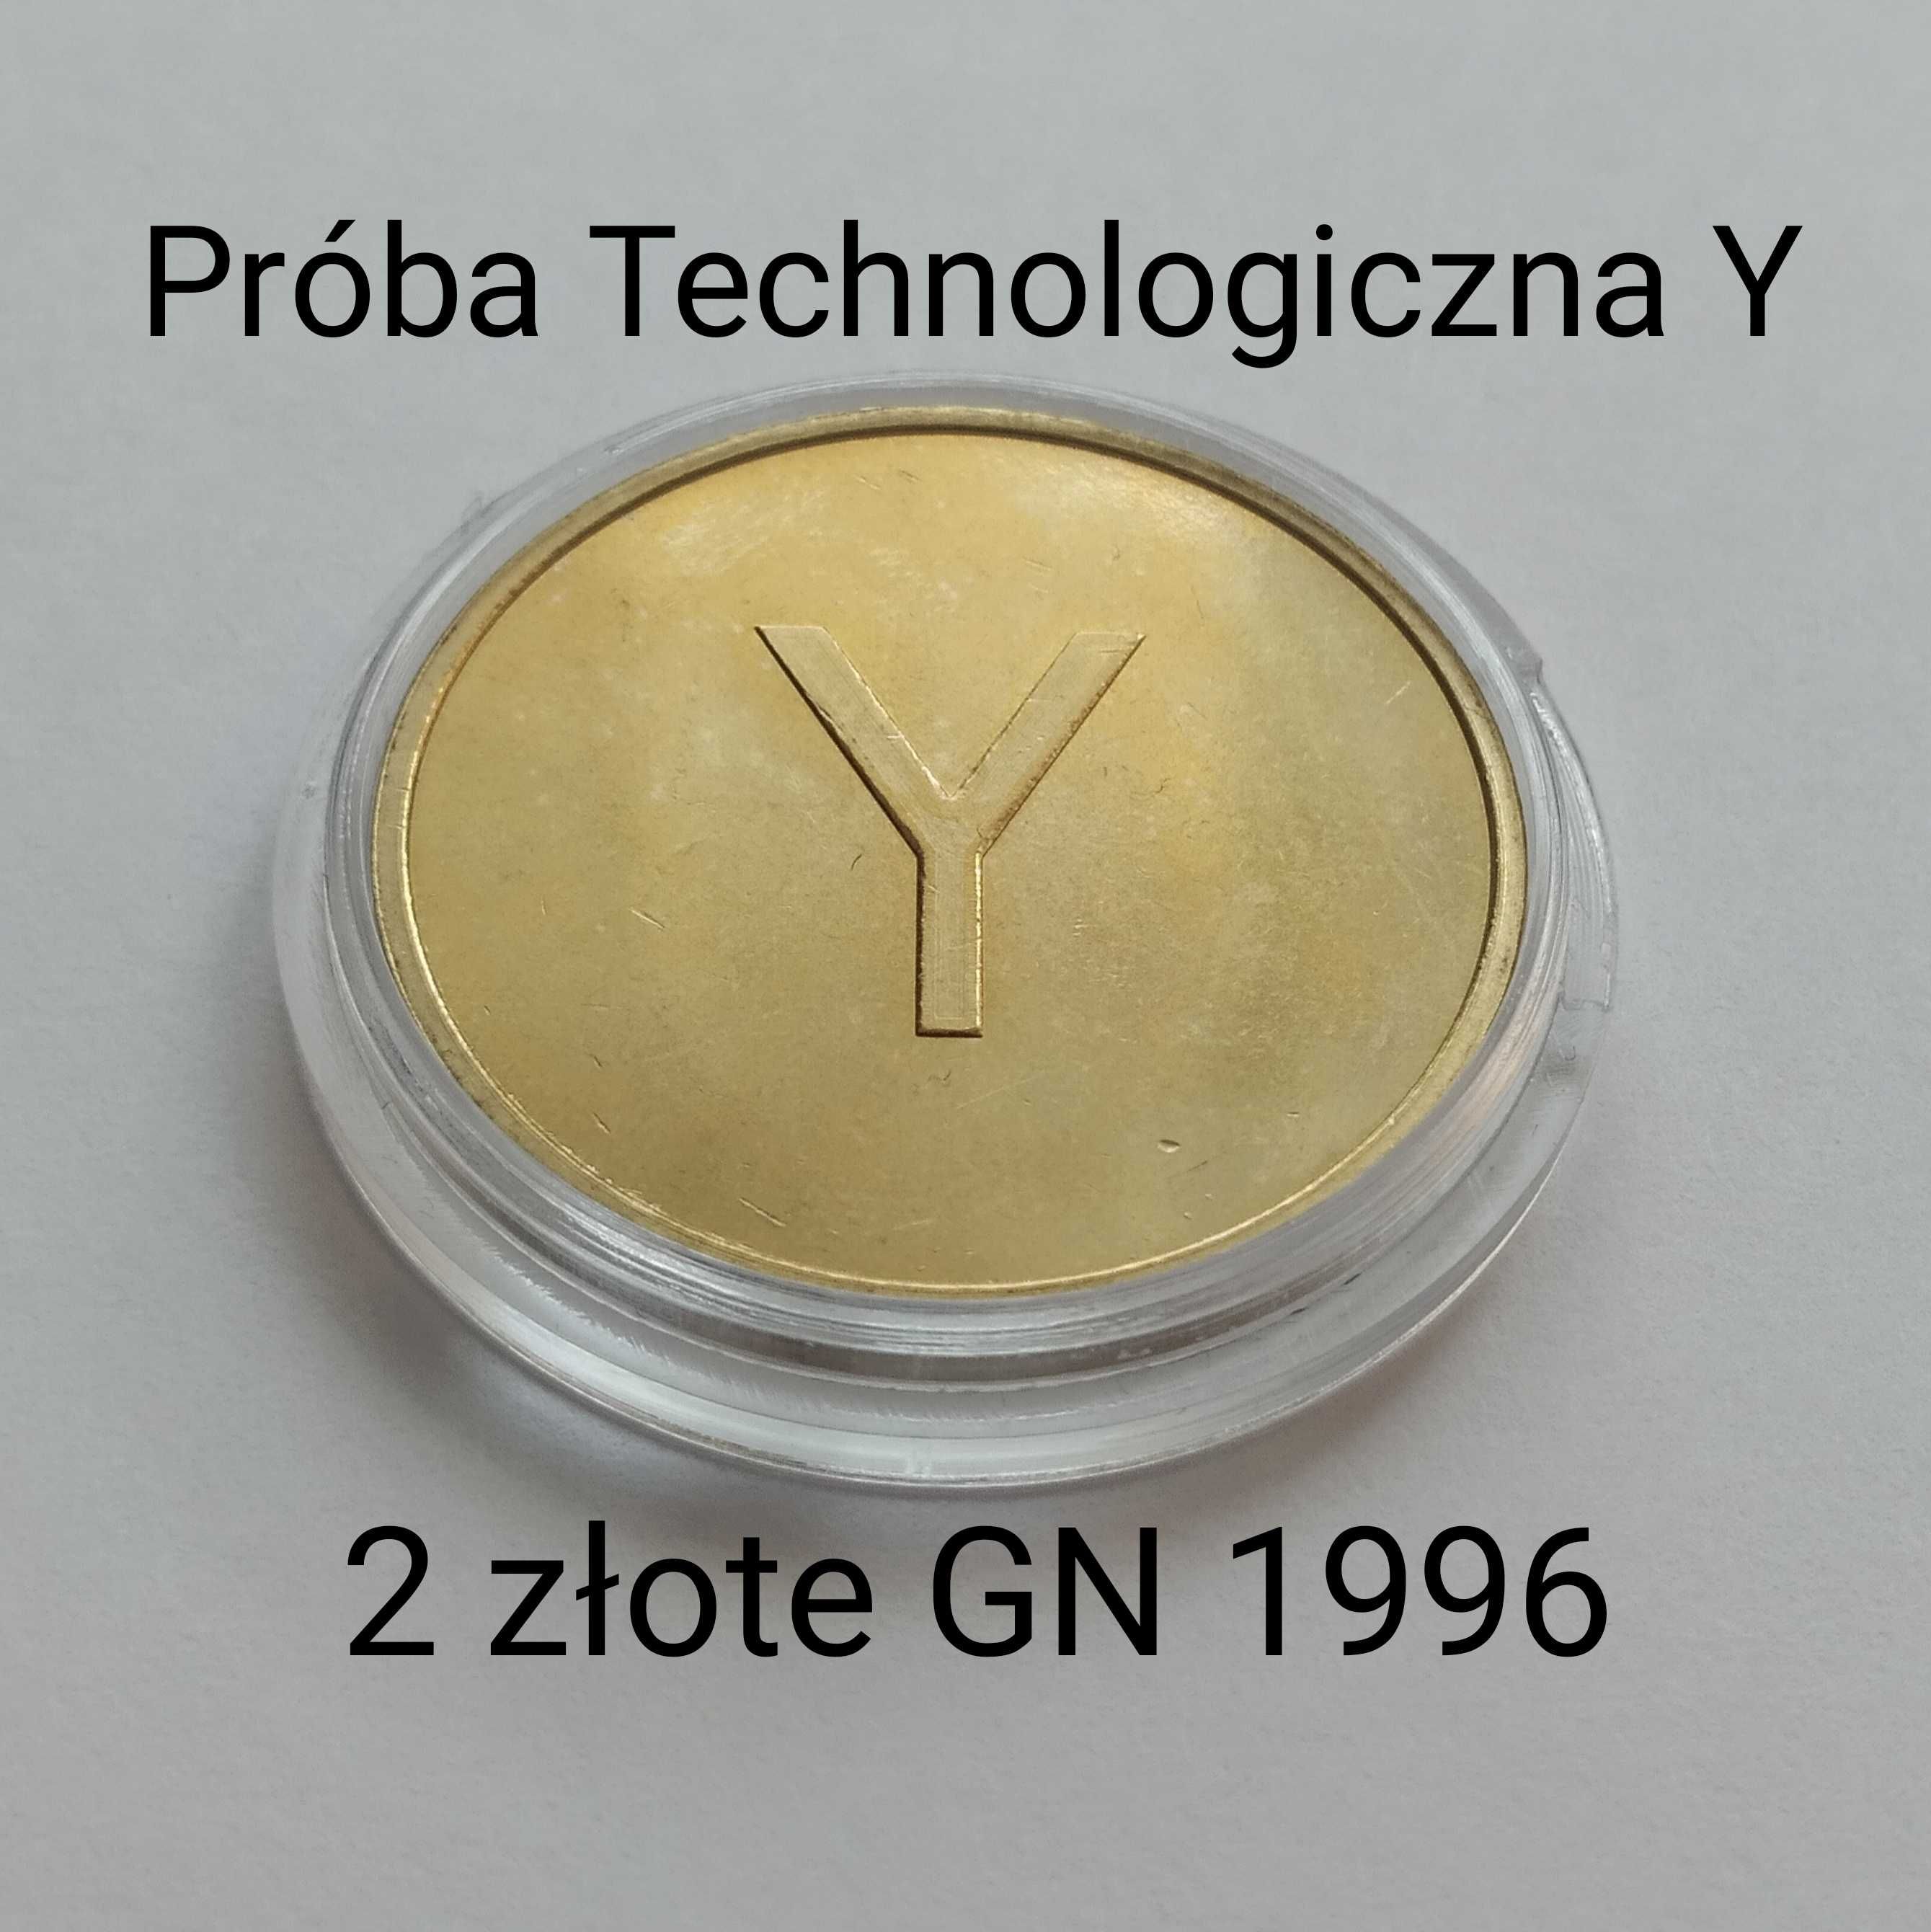 Y próba technologiczna 2 zł GN 1996 Zygmunt August Golden Nordic